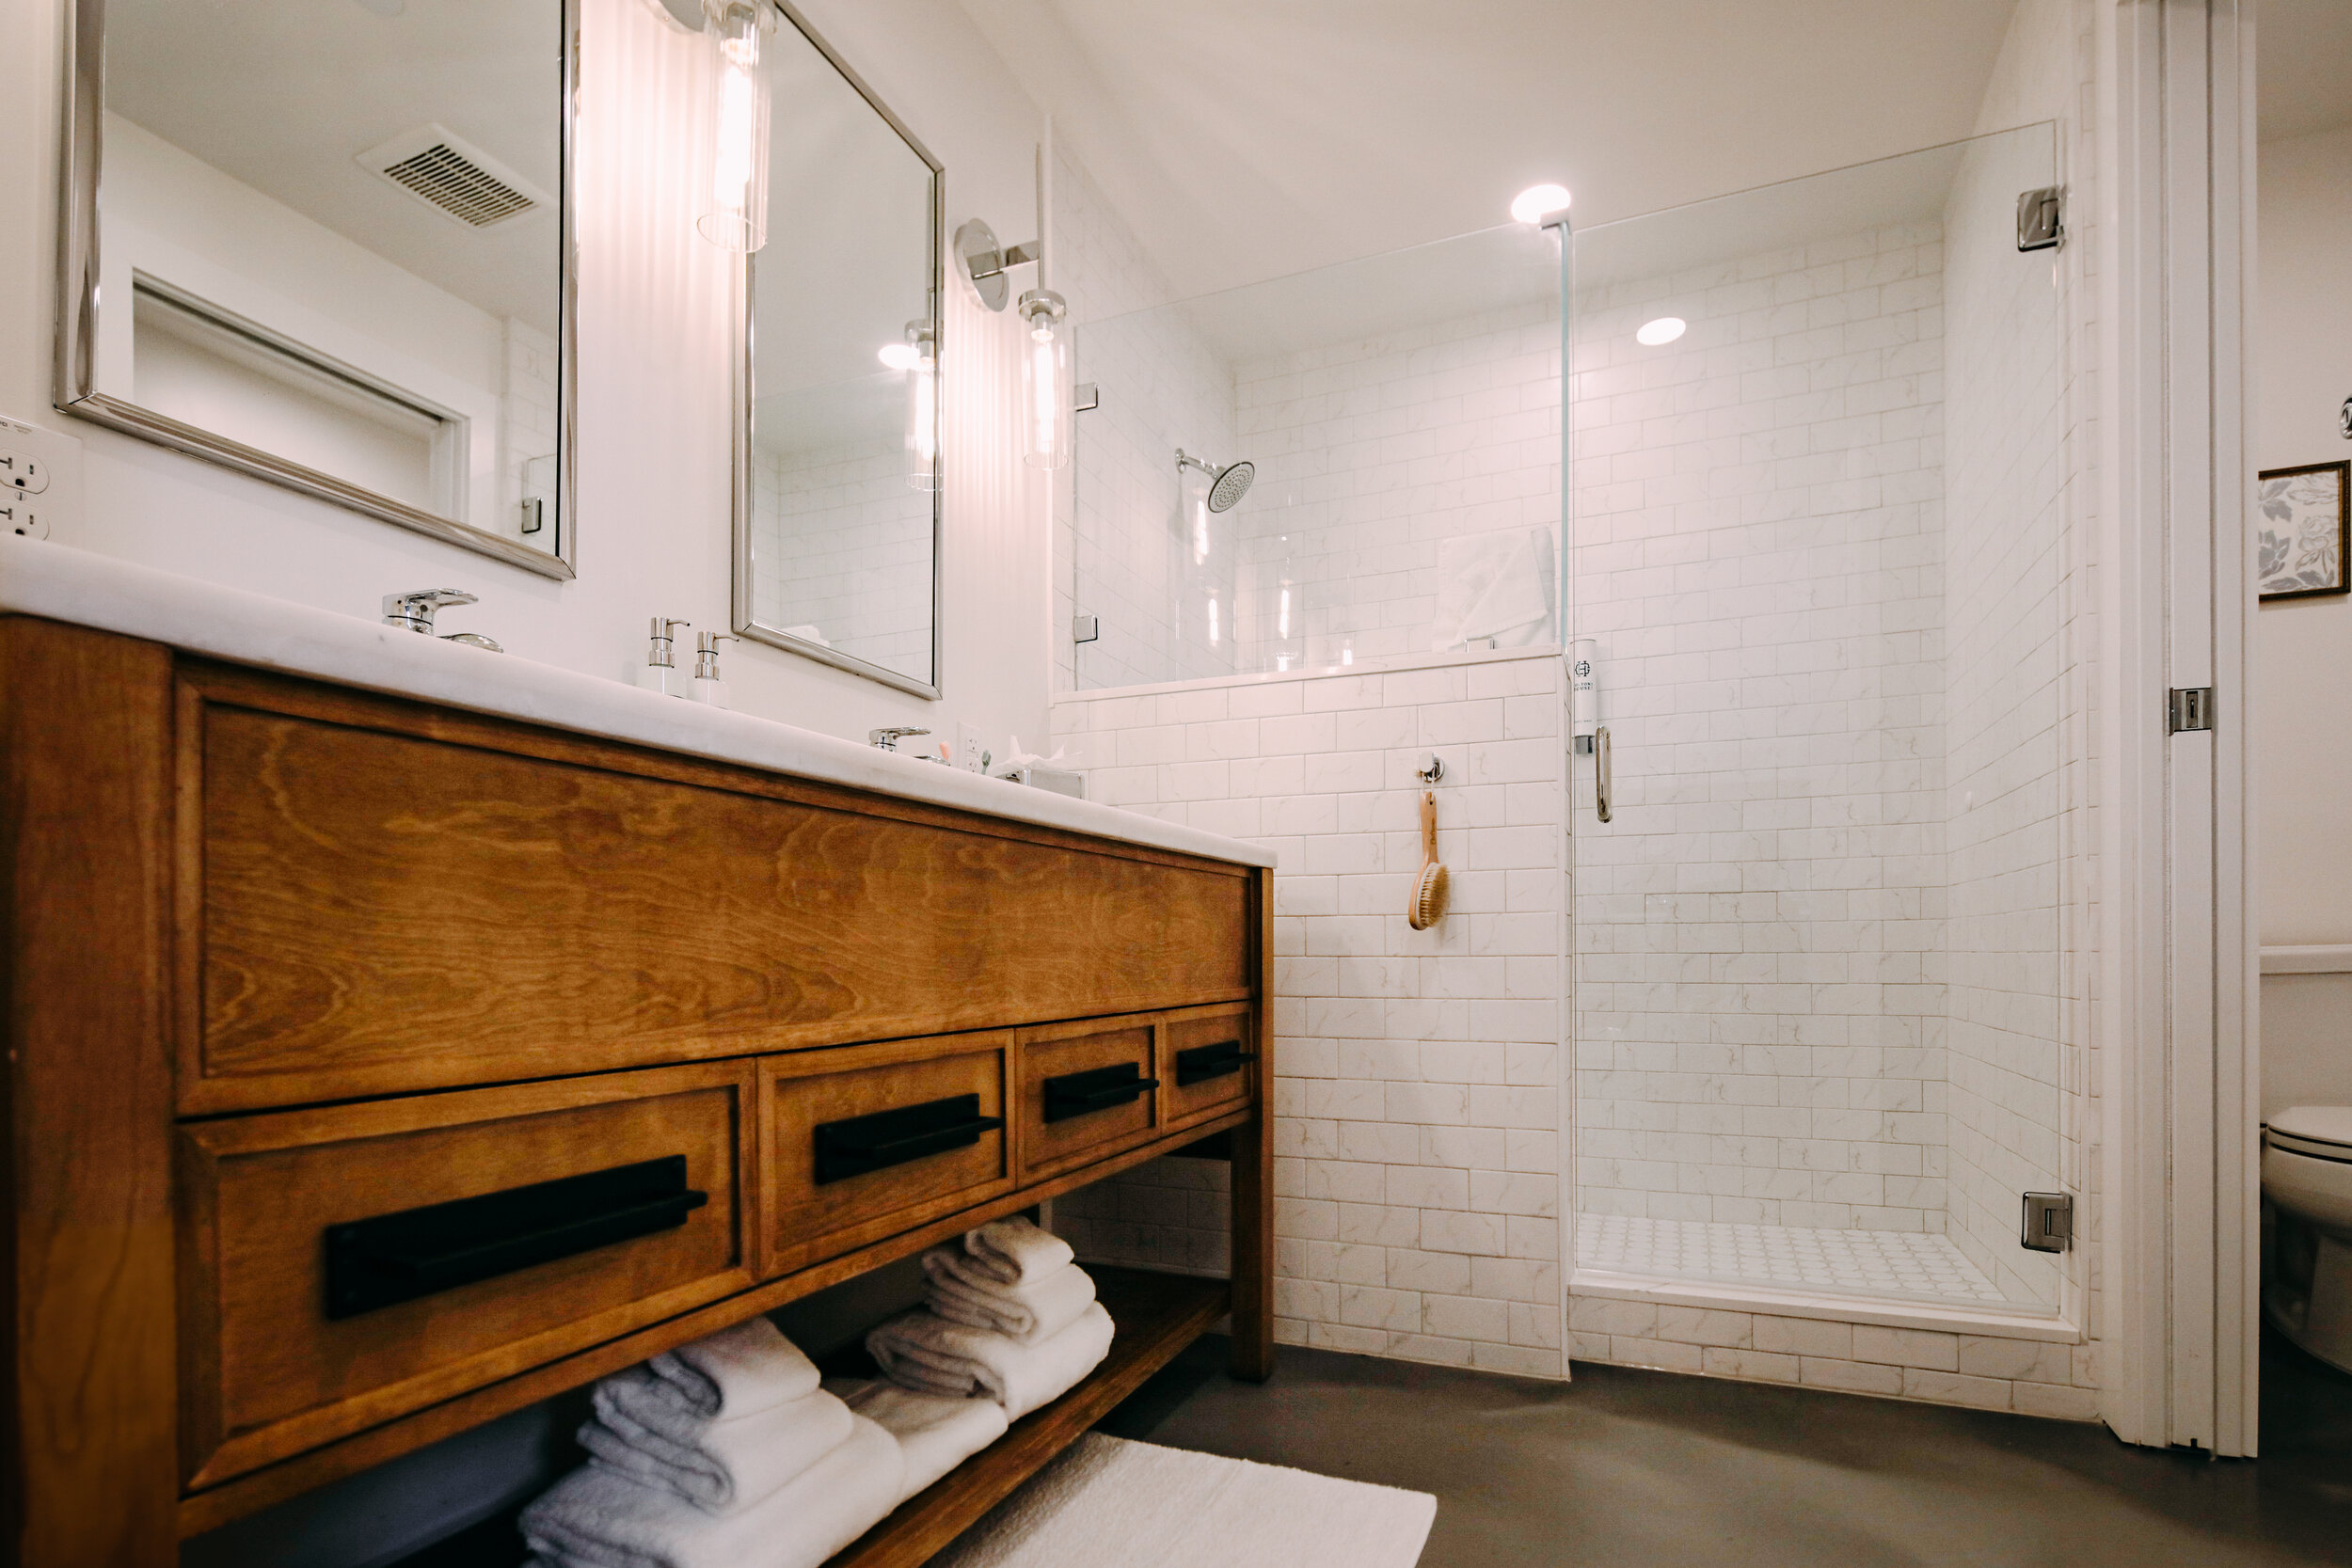 walk-in shower, double sink vanity, white towels